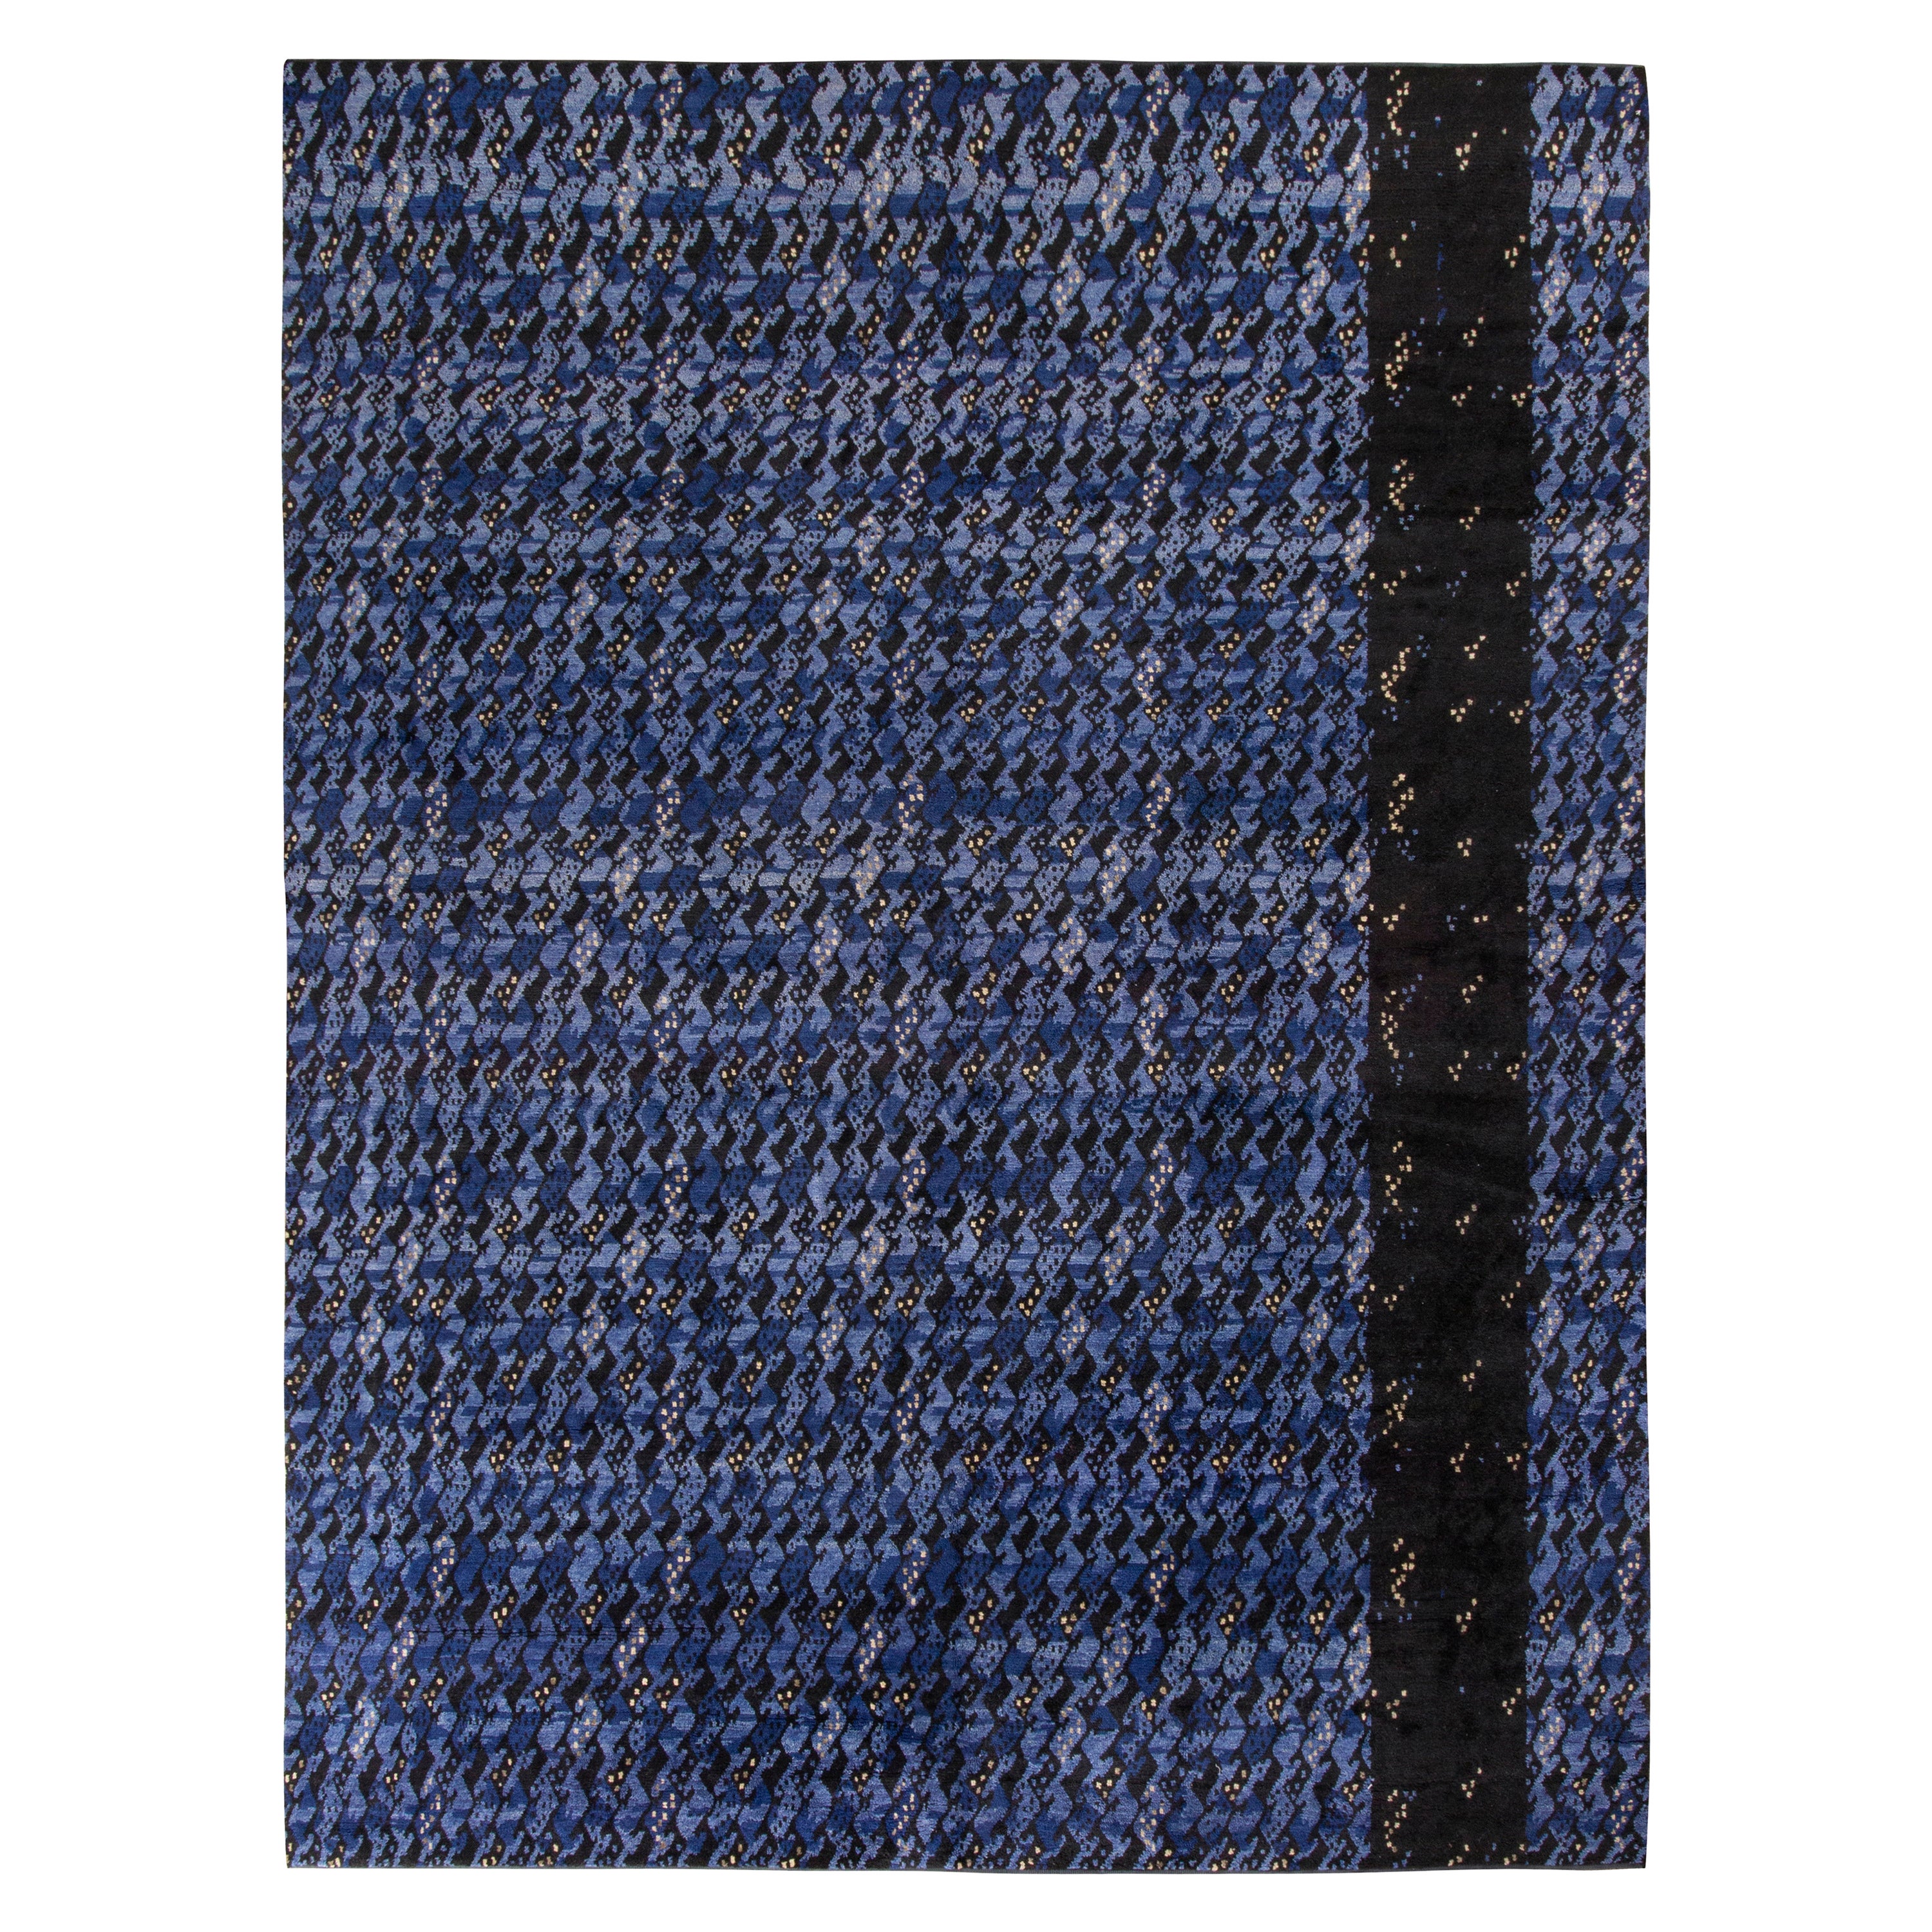 Rug & Kilim’s Scandinavian Style Rug in All over Blue, Black Geometric Pattern